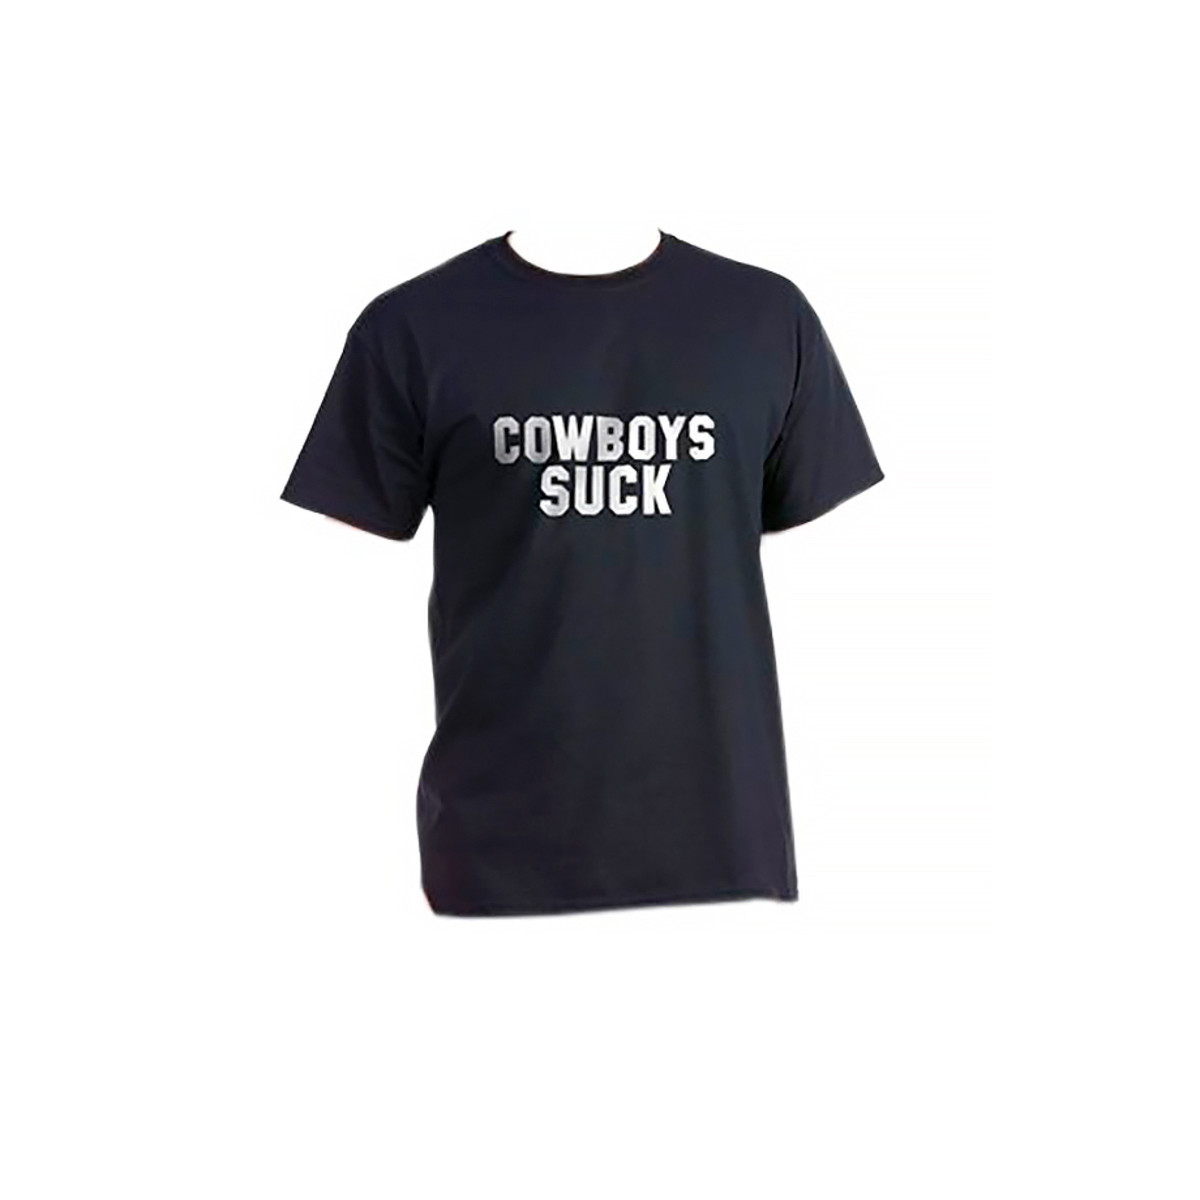 2015-1012-Cowboys-Suck-shirt.jpg